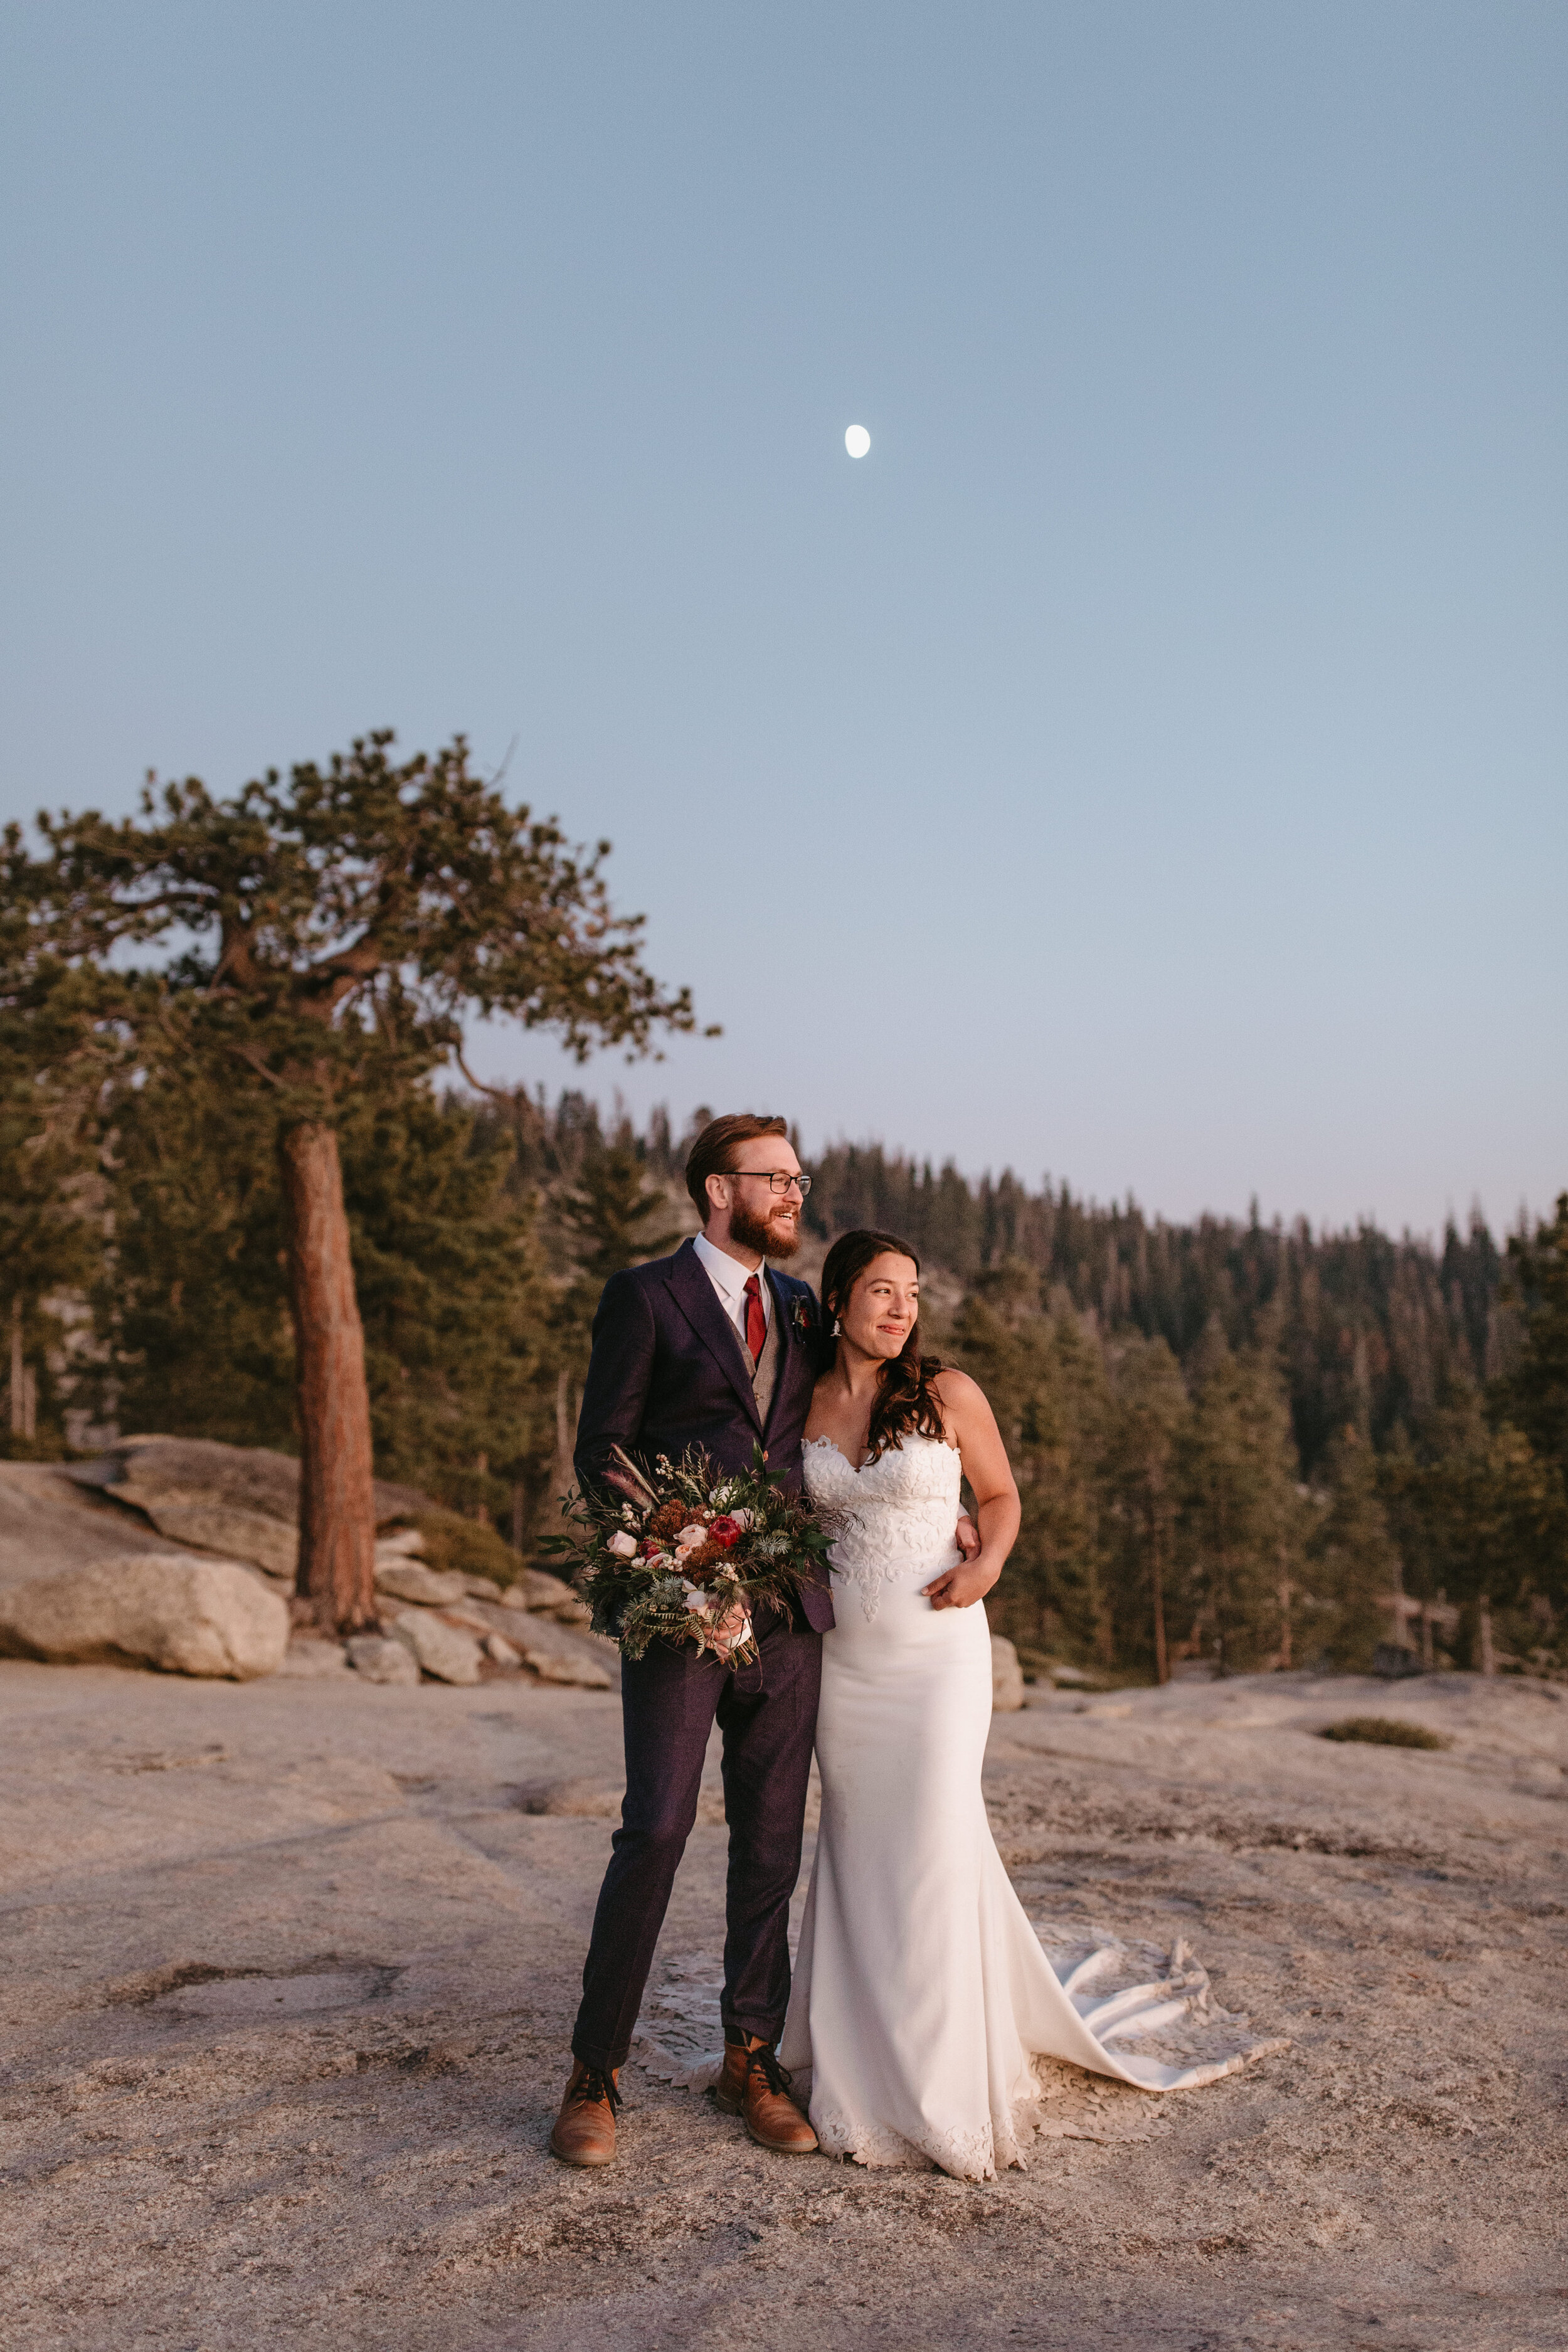 Nicole-Daacke-Photography-yosemite-national-park-elopement-photography-adventure-elopement-in-yosemite-taft-point-sunset-elopement-photographs-california-intimate-destination-wedding-in-yosemite-national-park-9554.jpg